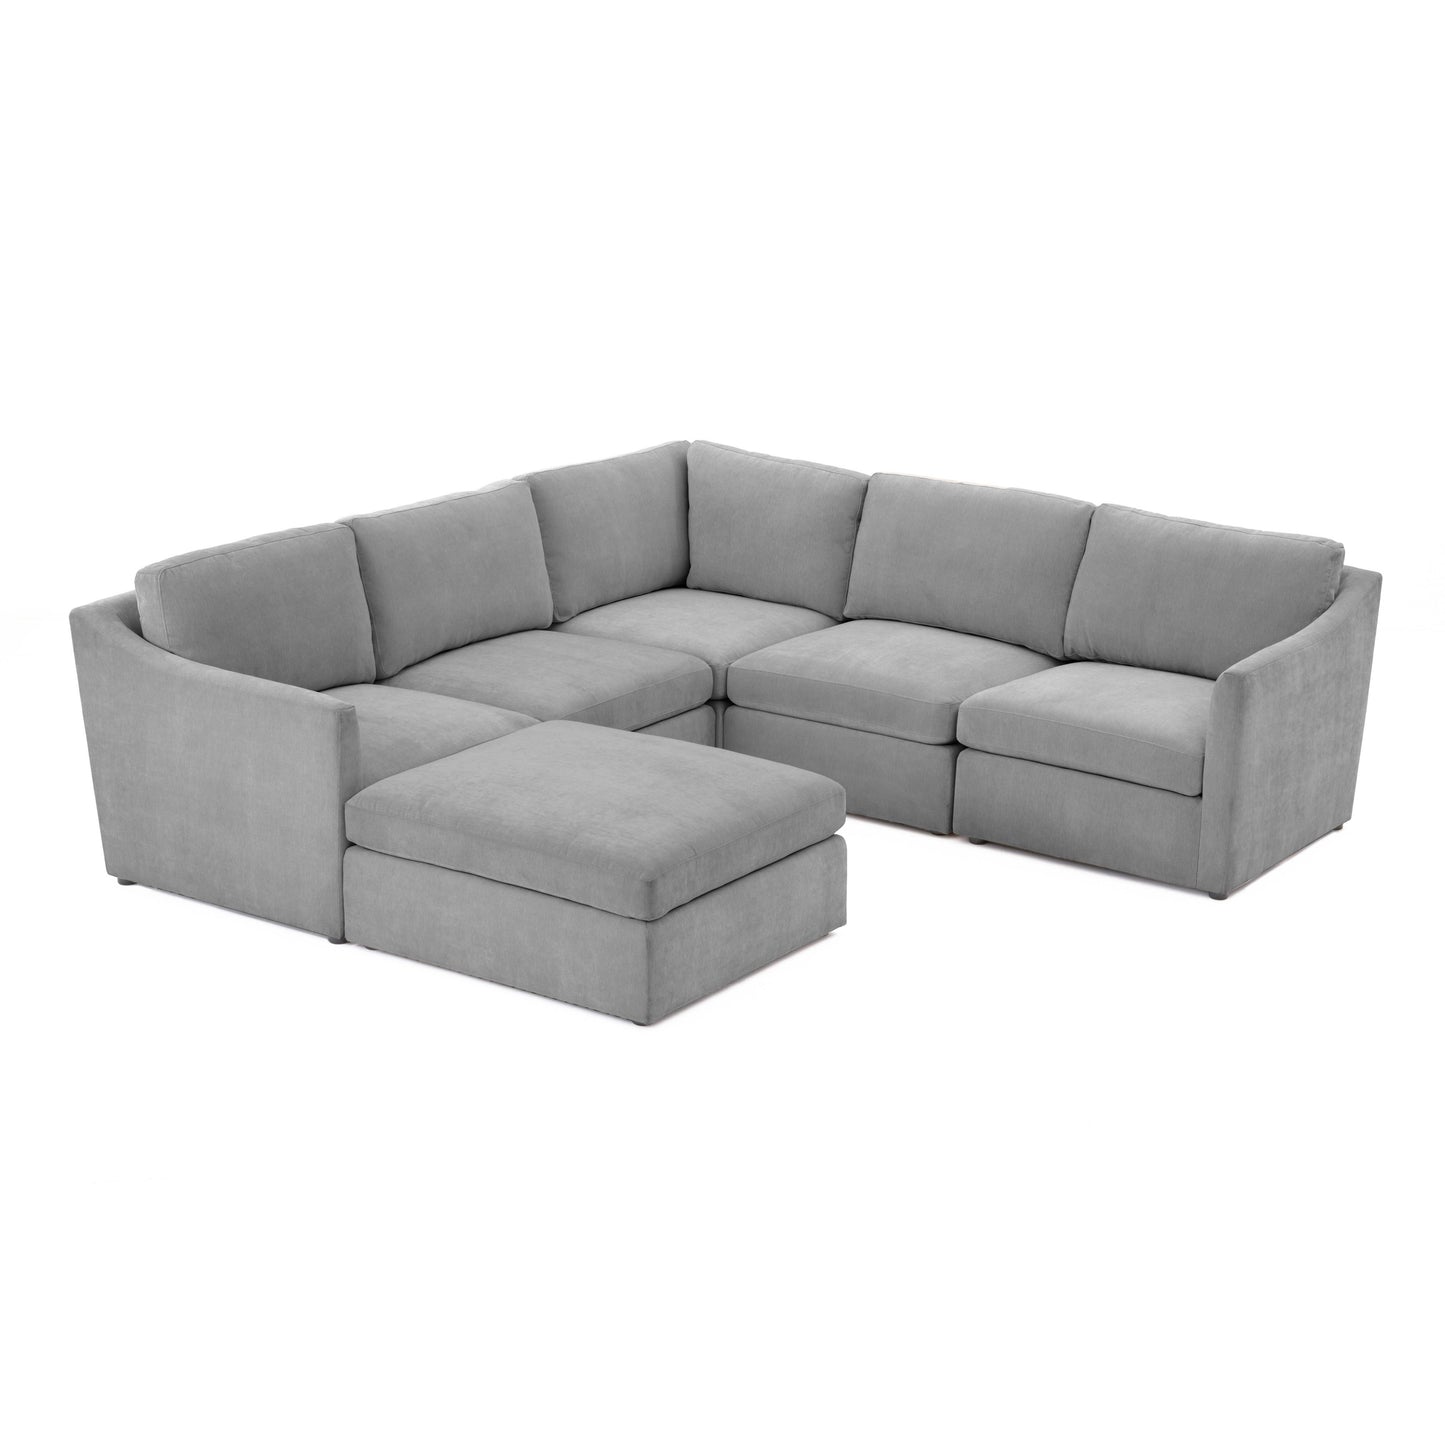 libre gray modular chaise sectional